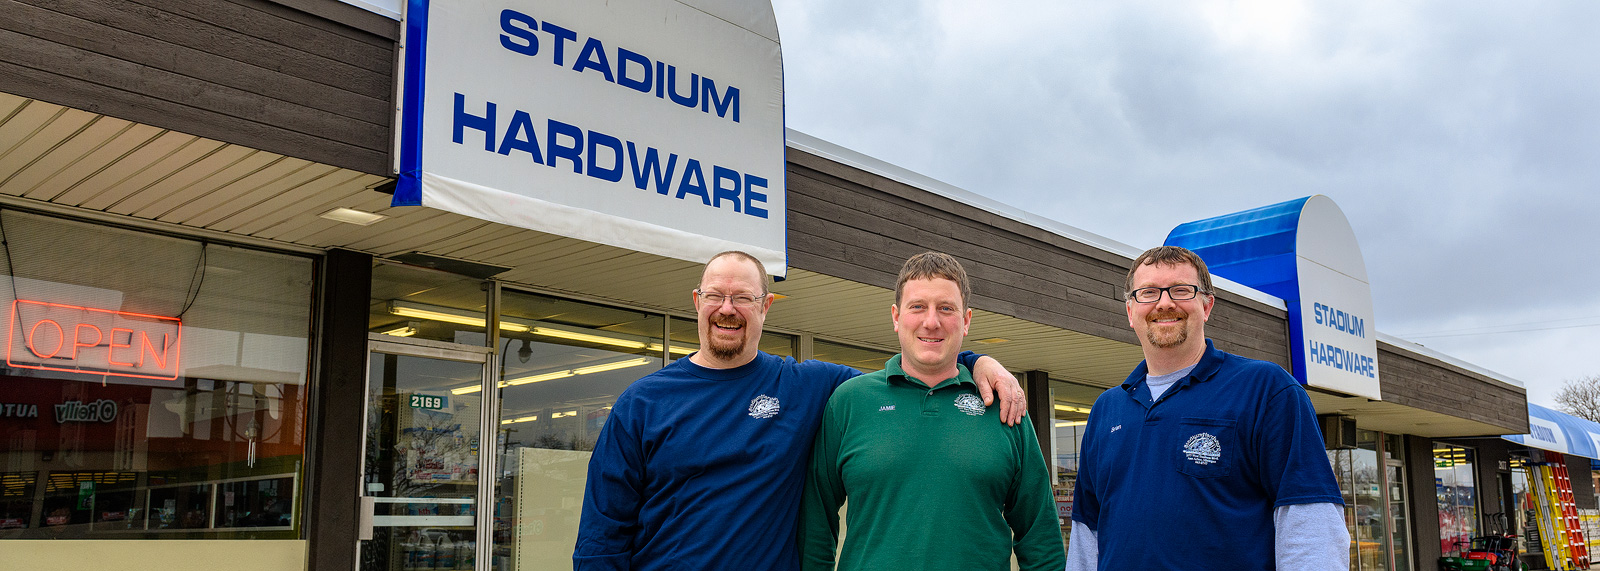 Stadium Hardware owners Skip Hackbarth, Jamie Brustad and Brian Bennink